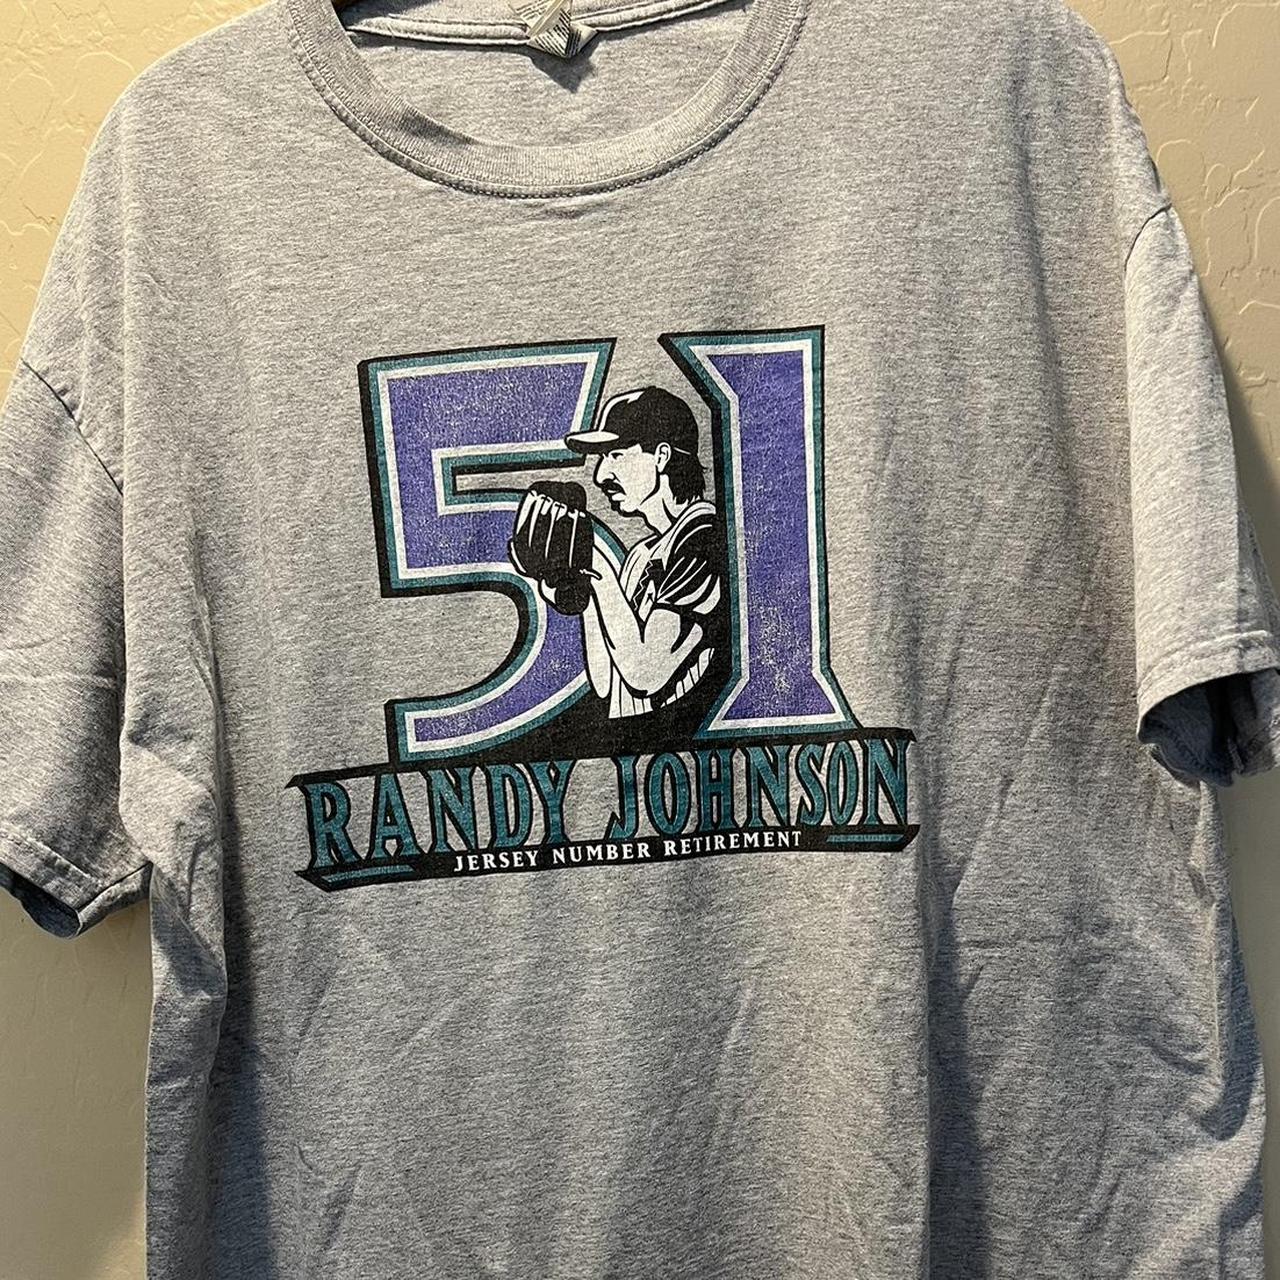 randy johnson purple jersey